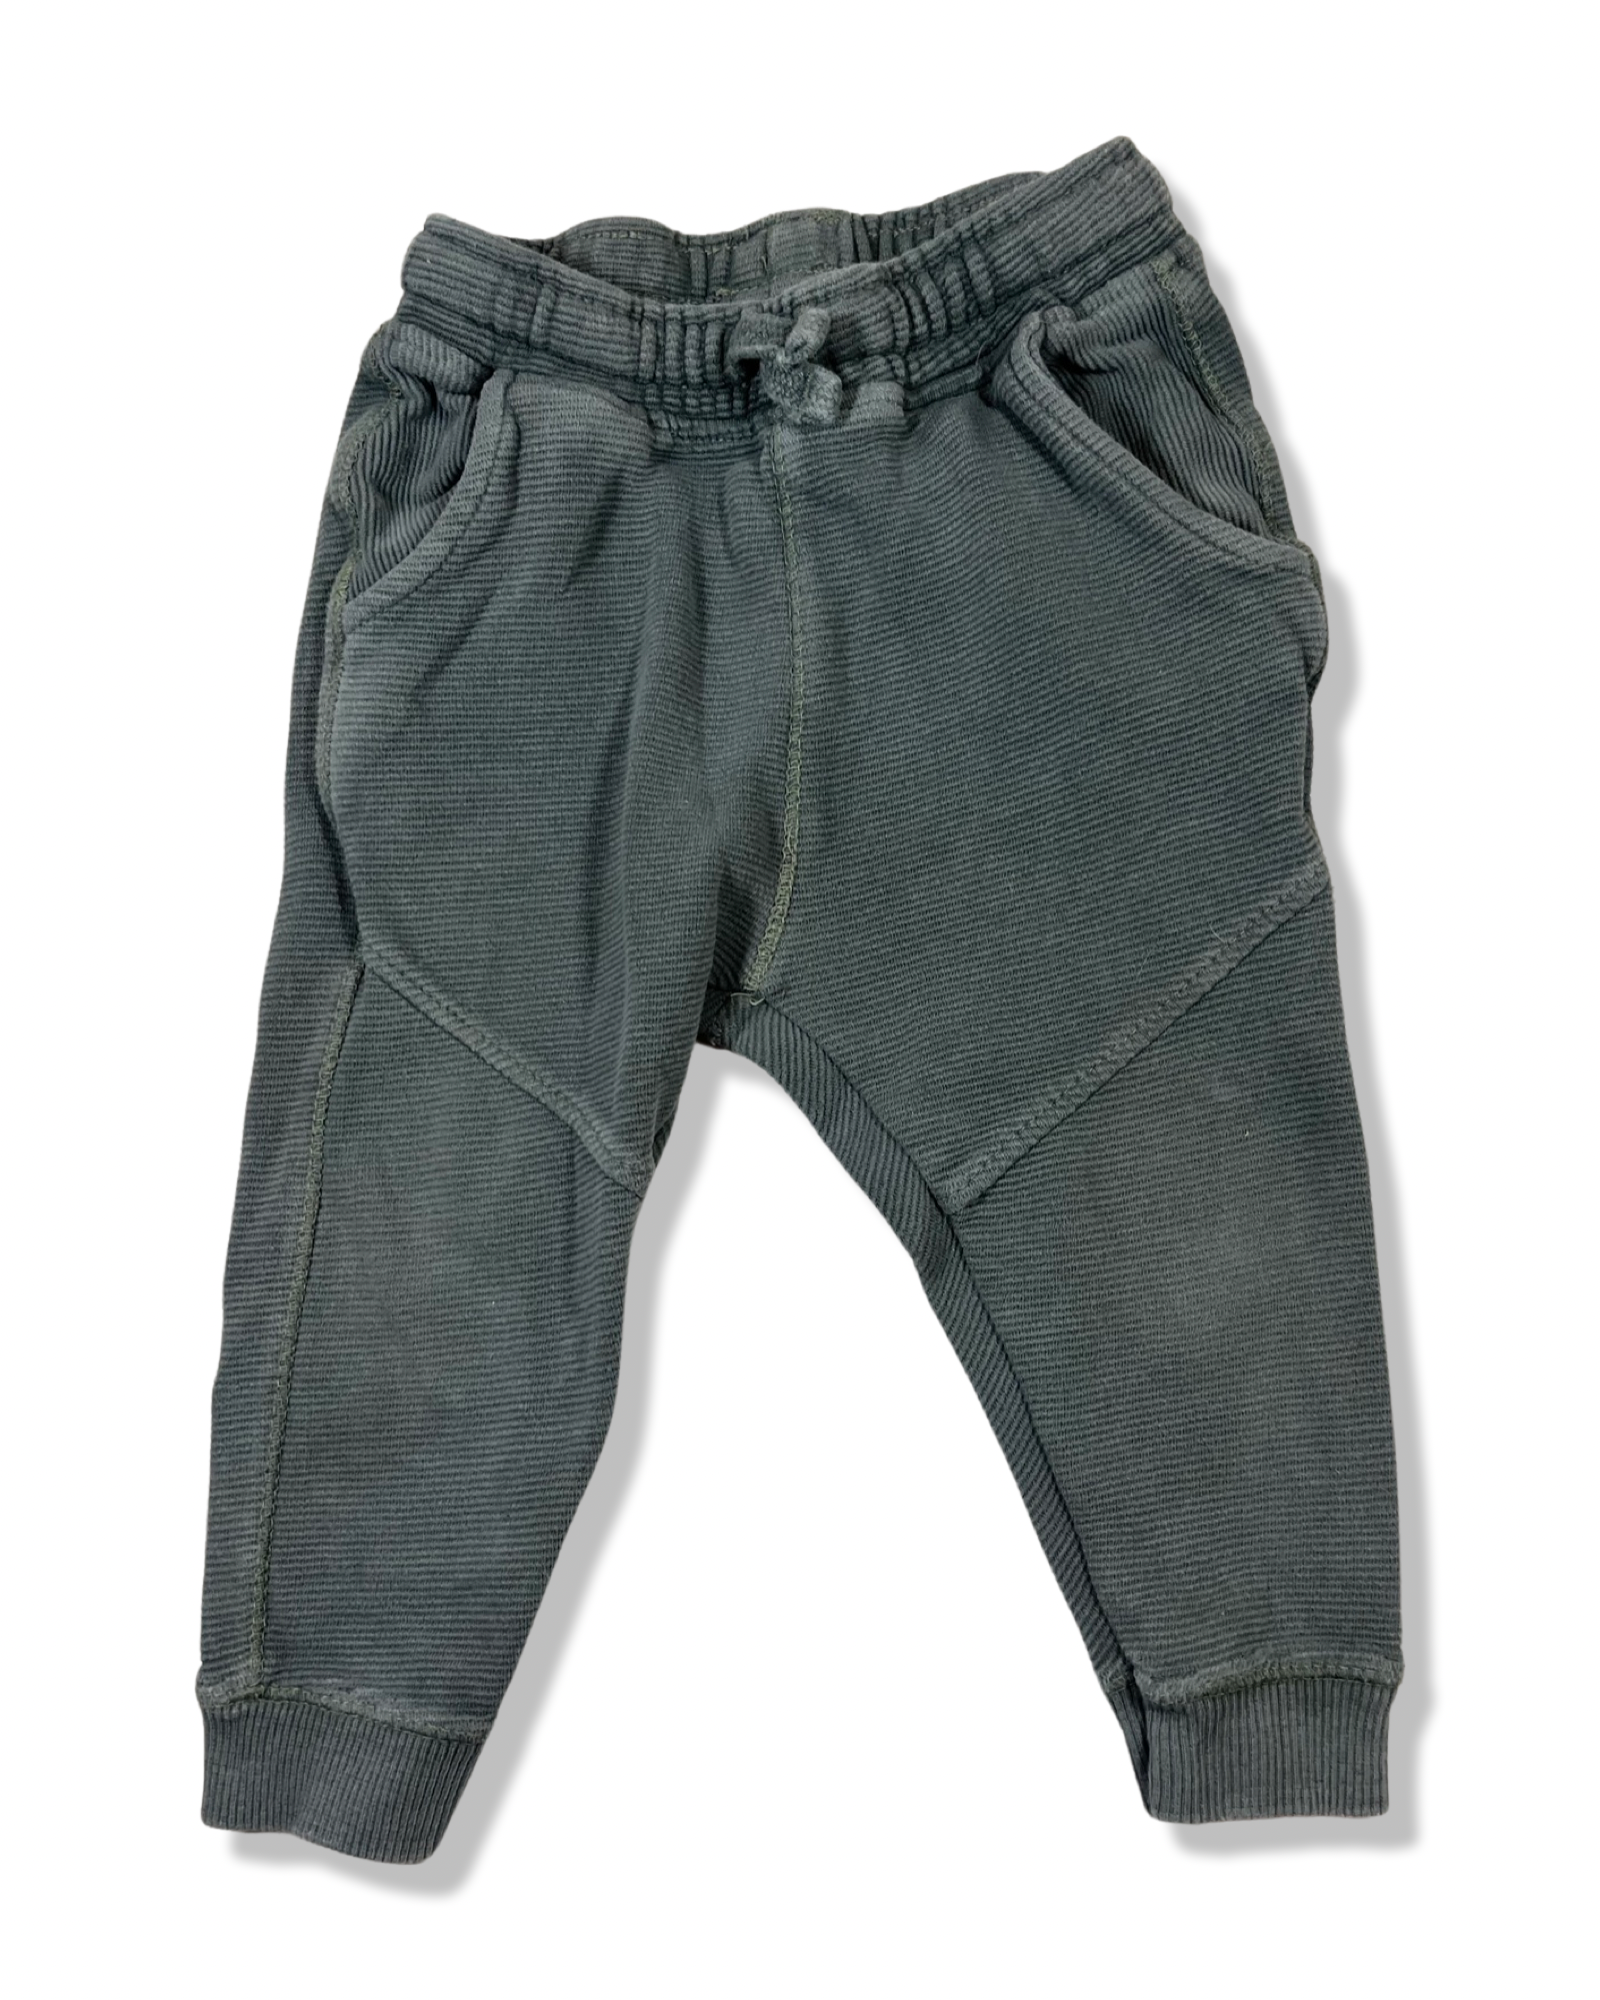 Zara Baby Green Pants (12-18M)